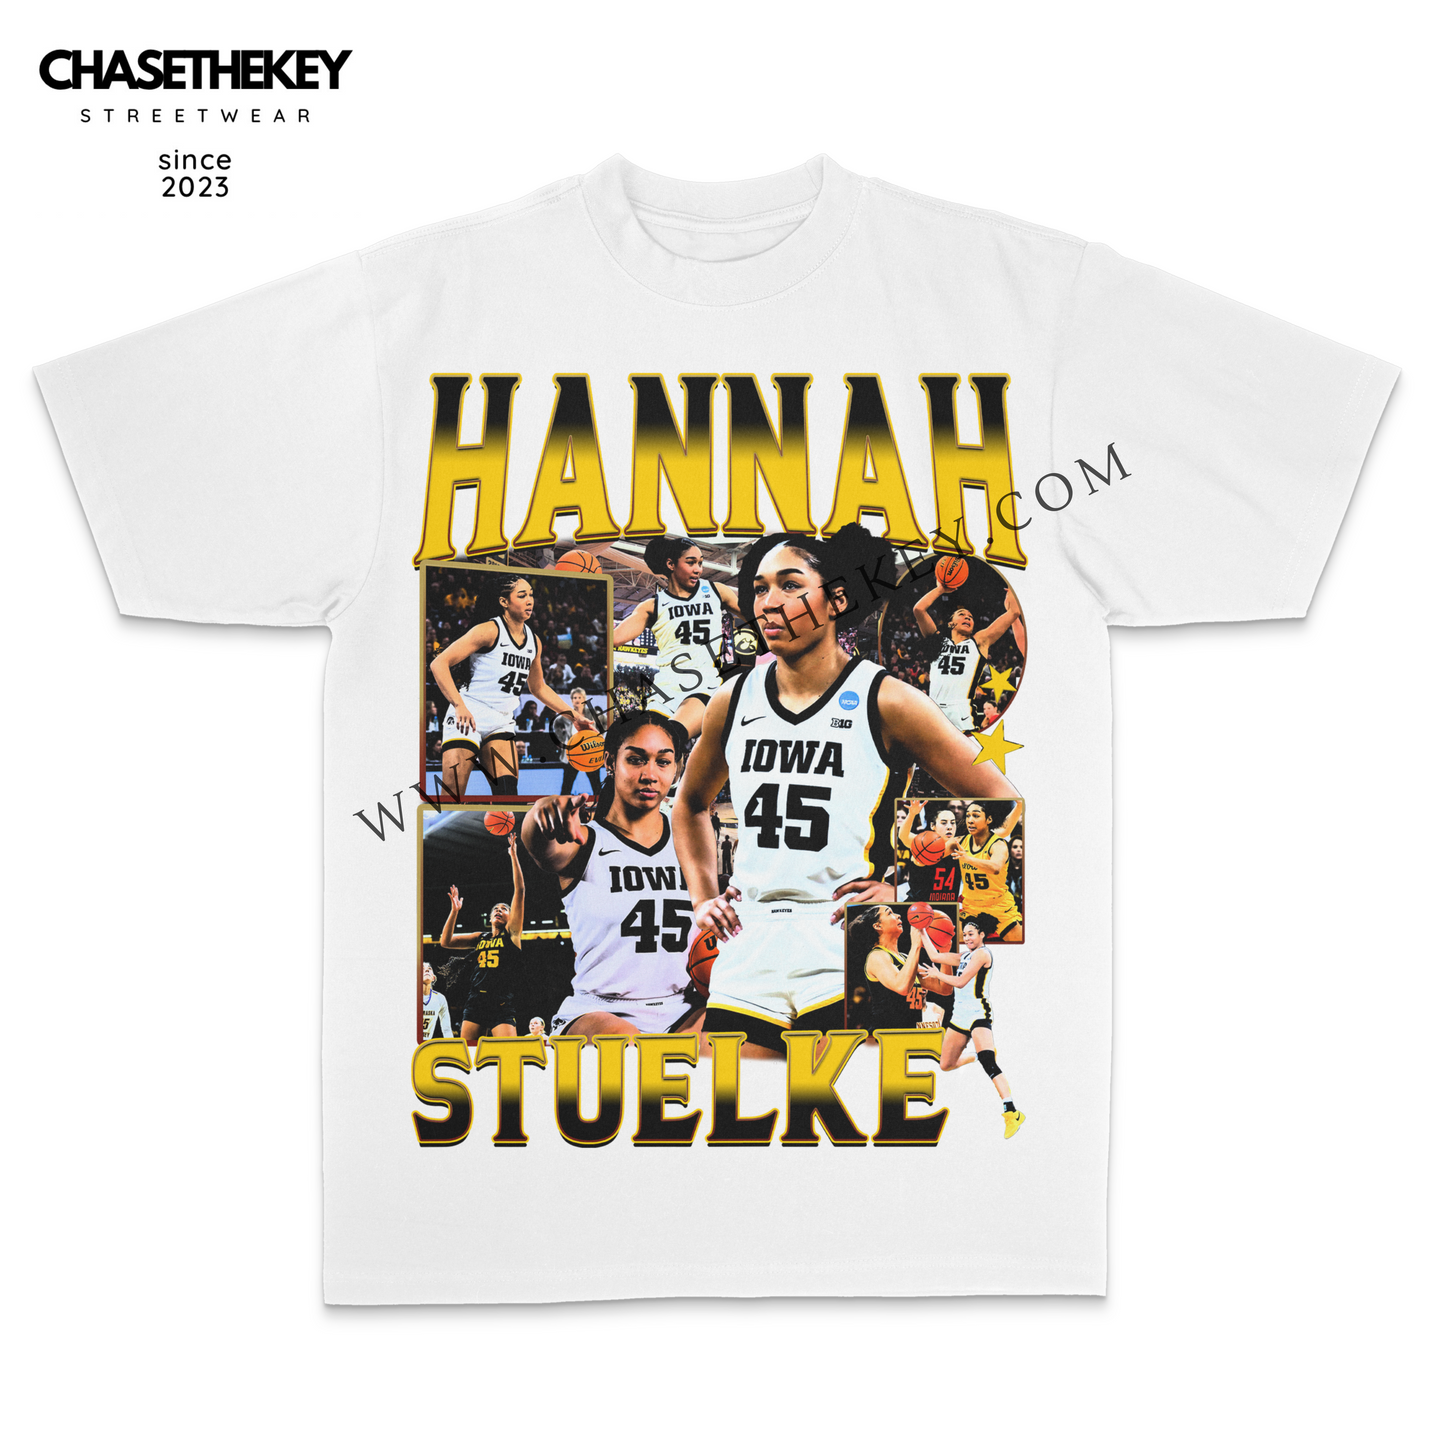 Hannah Stuelke Shirt